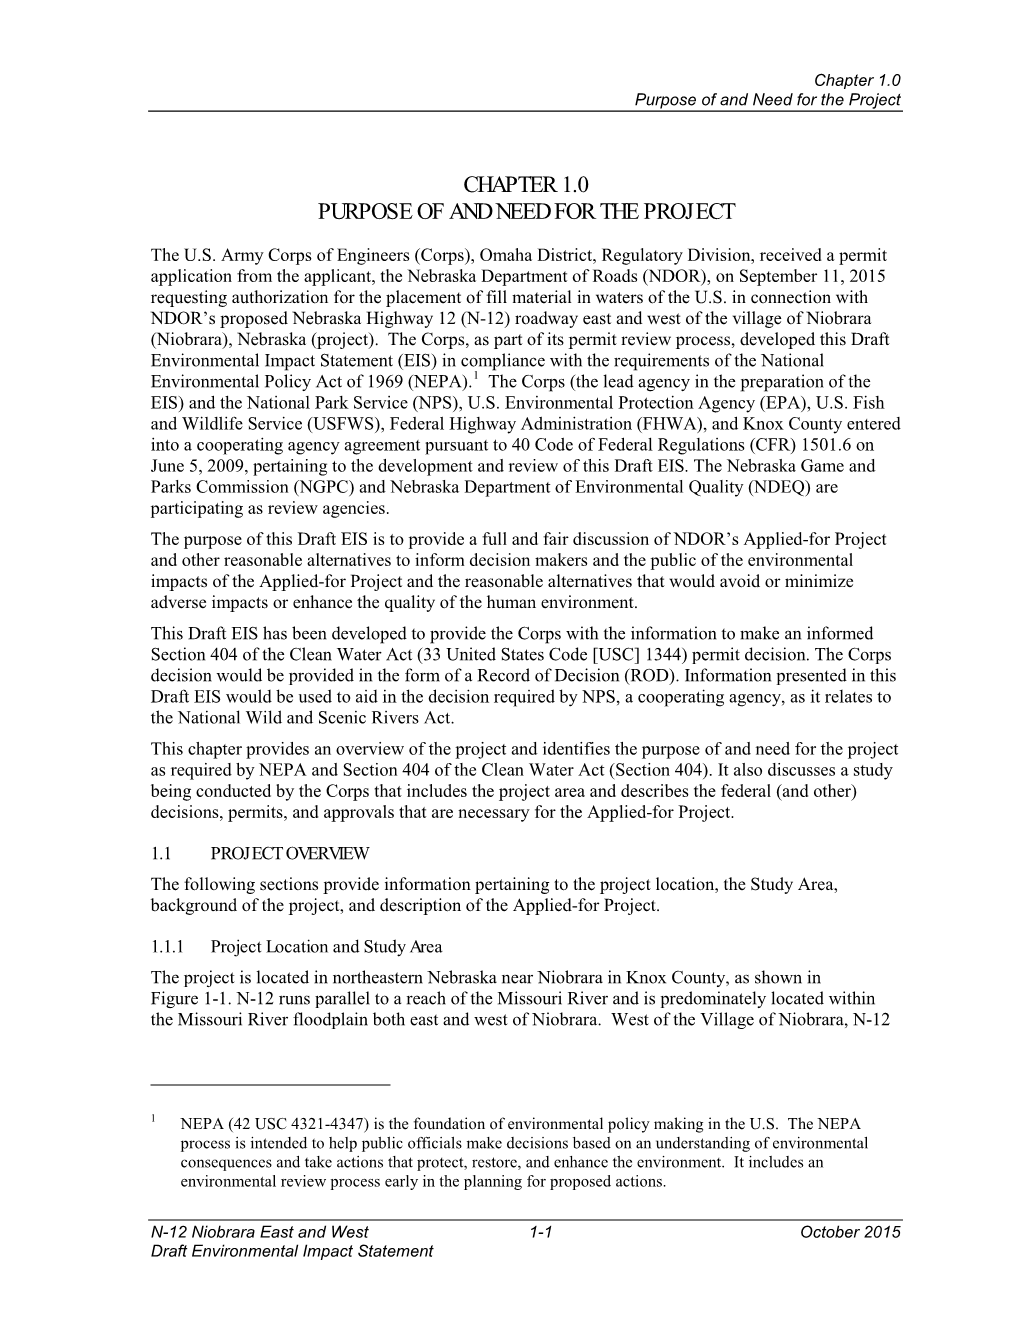 N-12 Niobrara East and West Draft Environmental Impact Statement